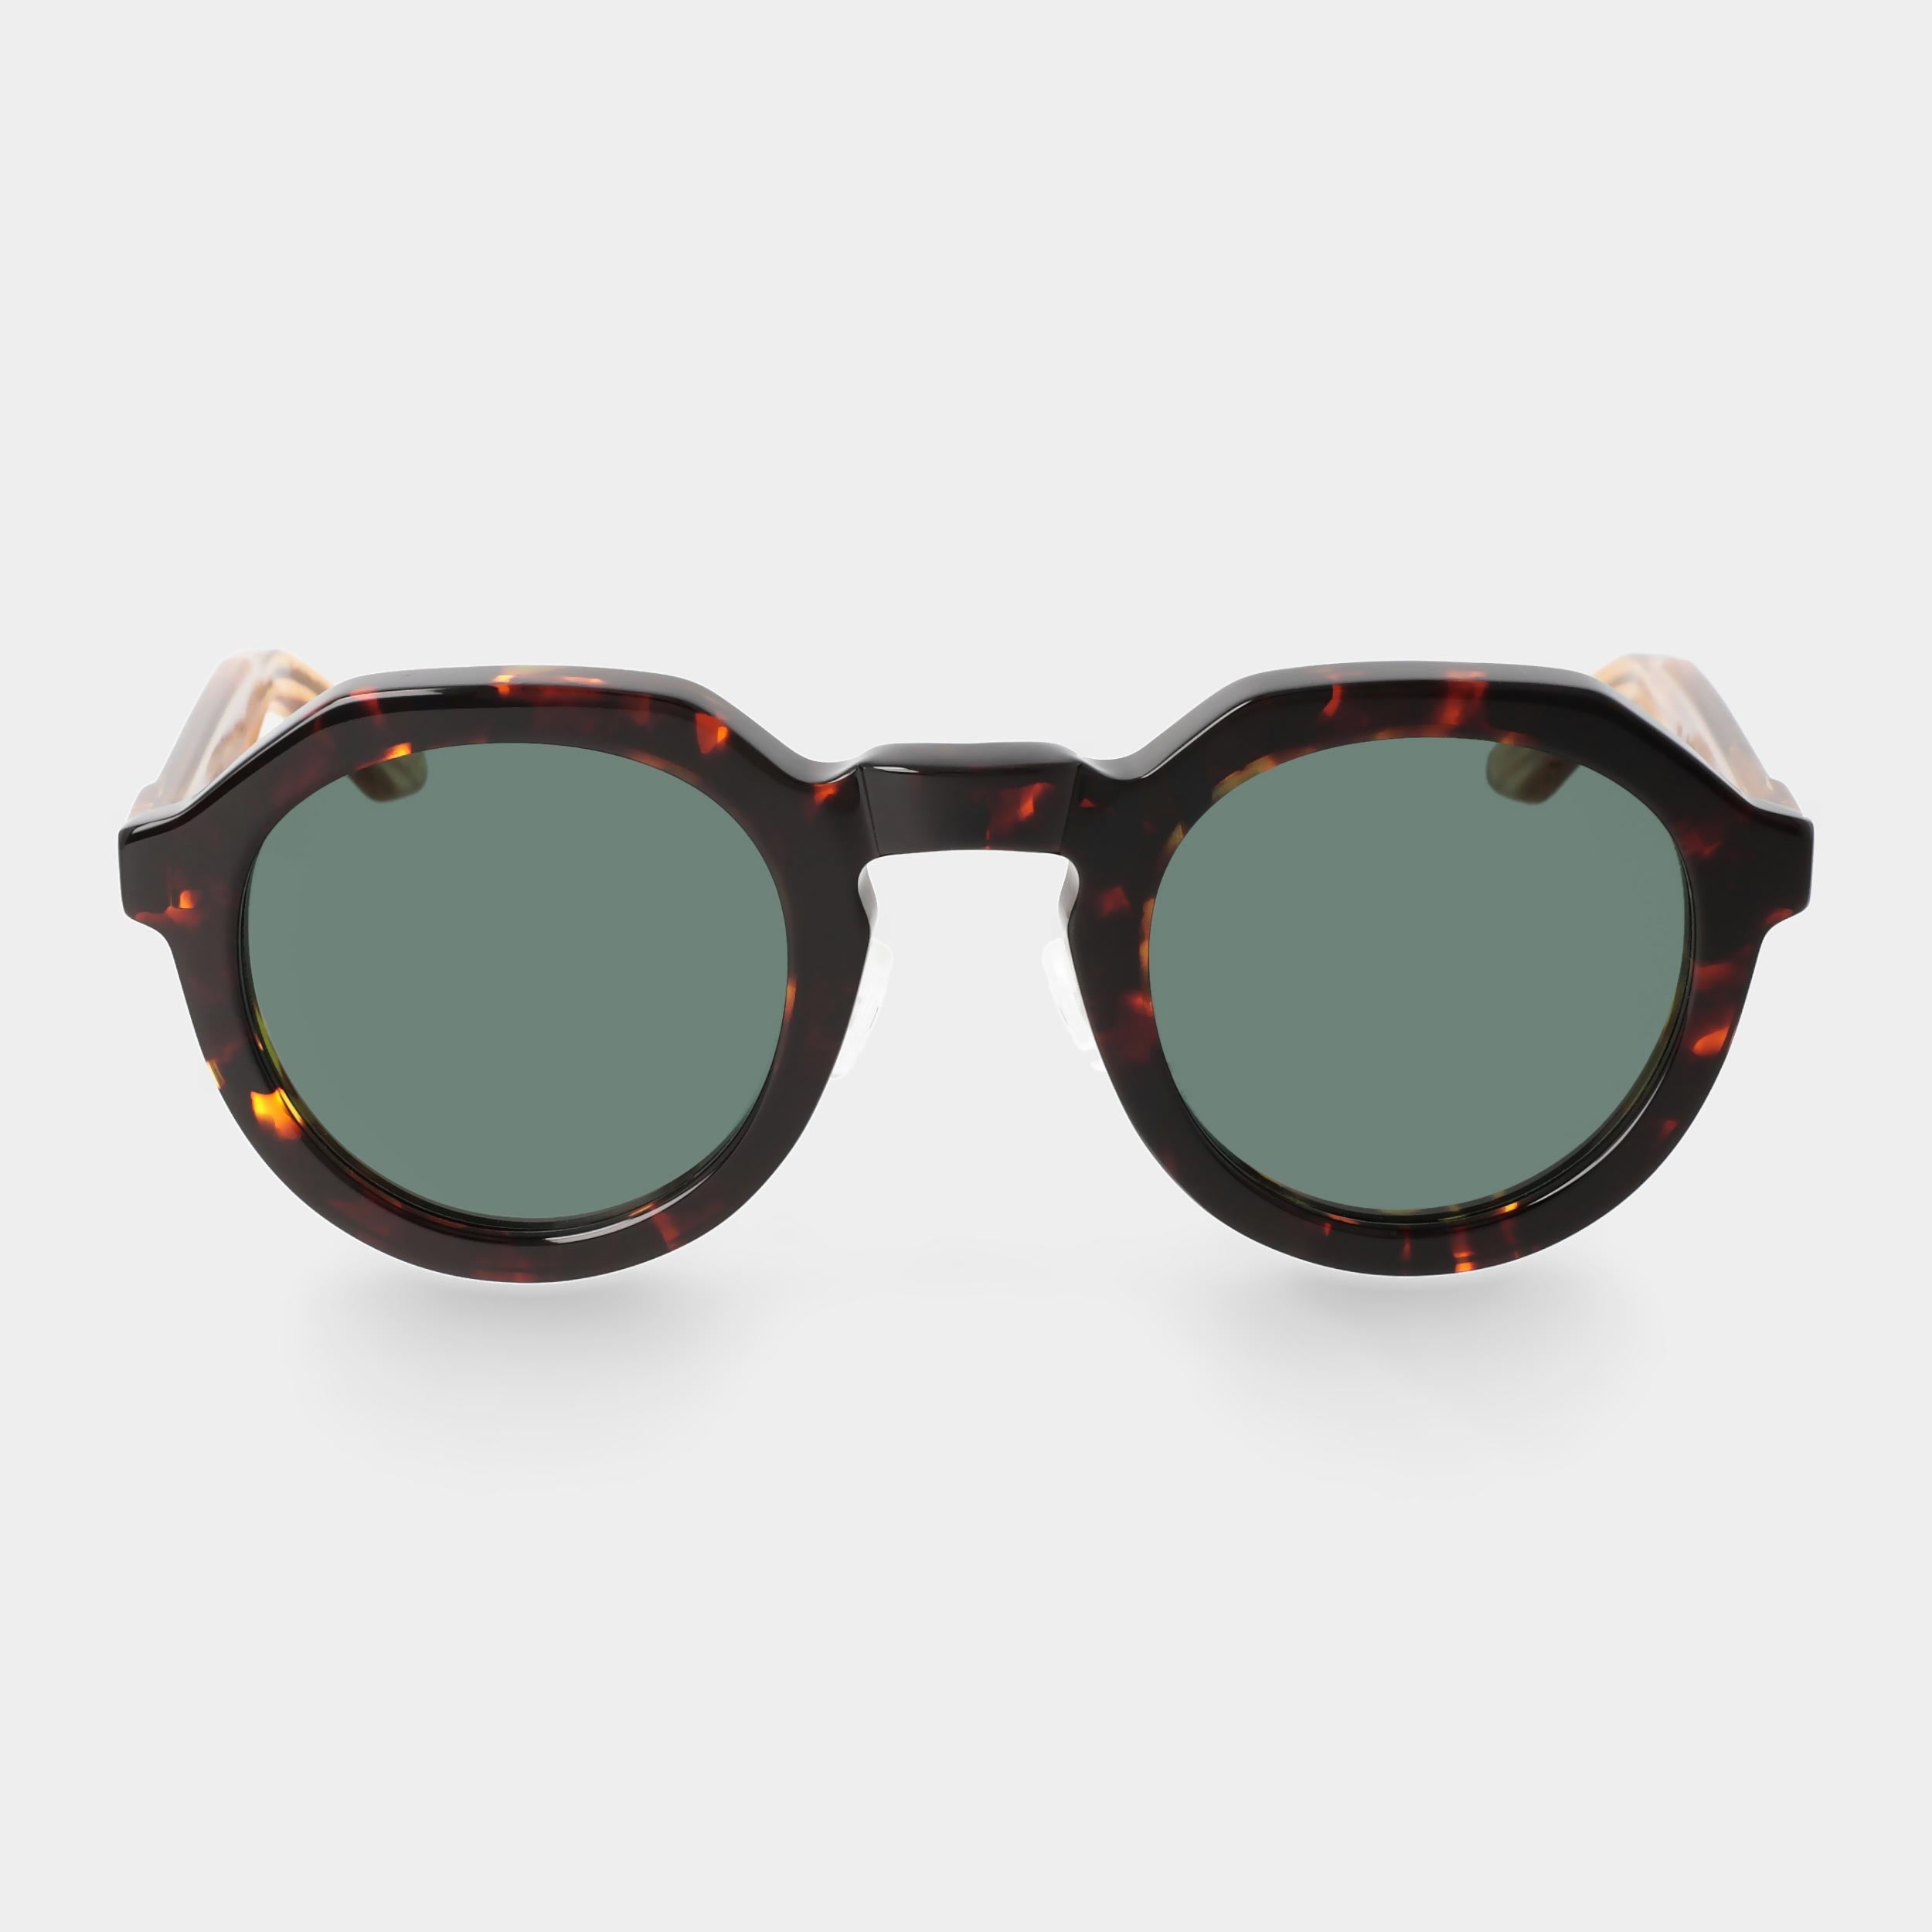 sunglasses-ivy-eco-bicolor-bottle-green-sustainable-tbd-eyewear